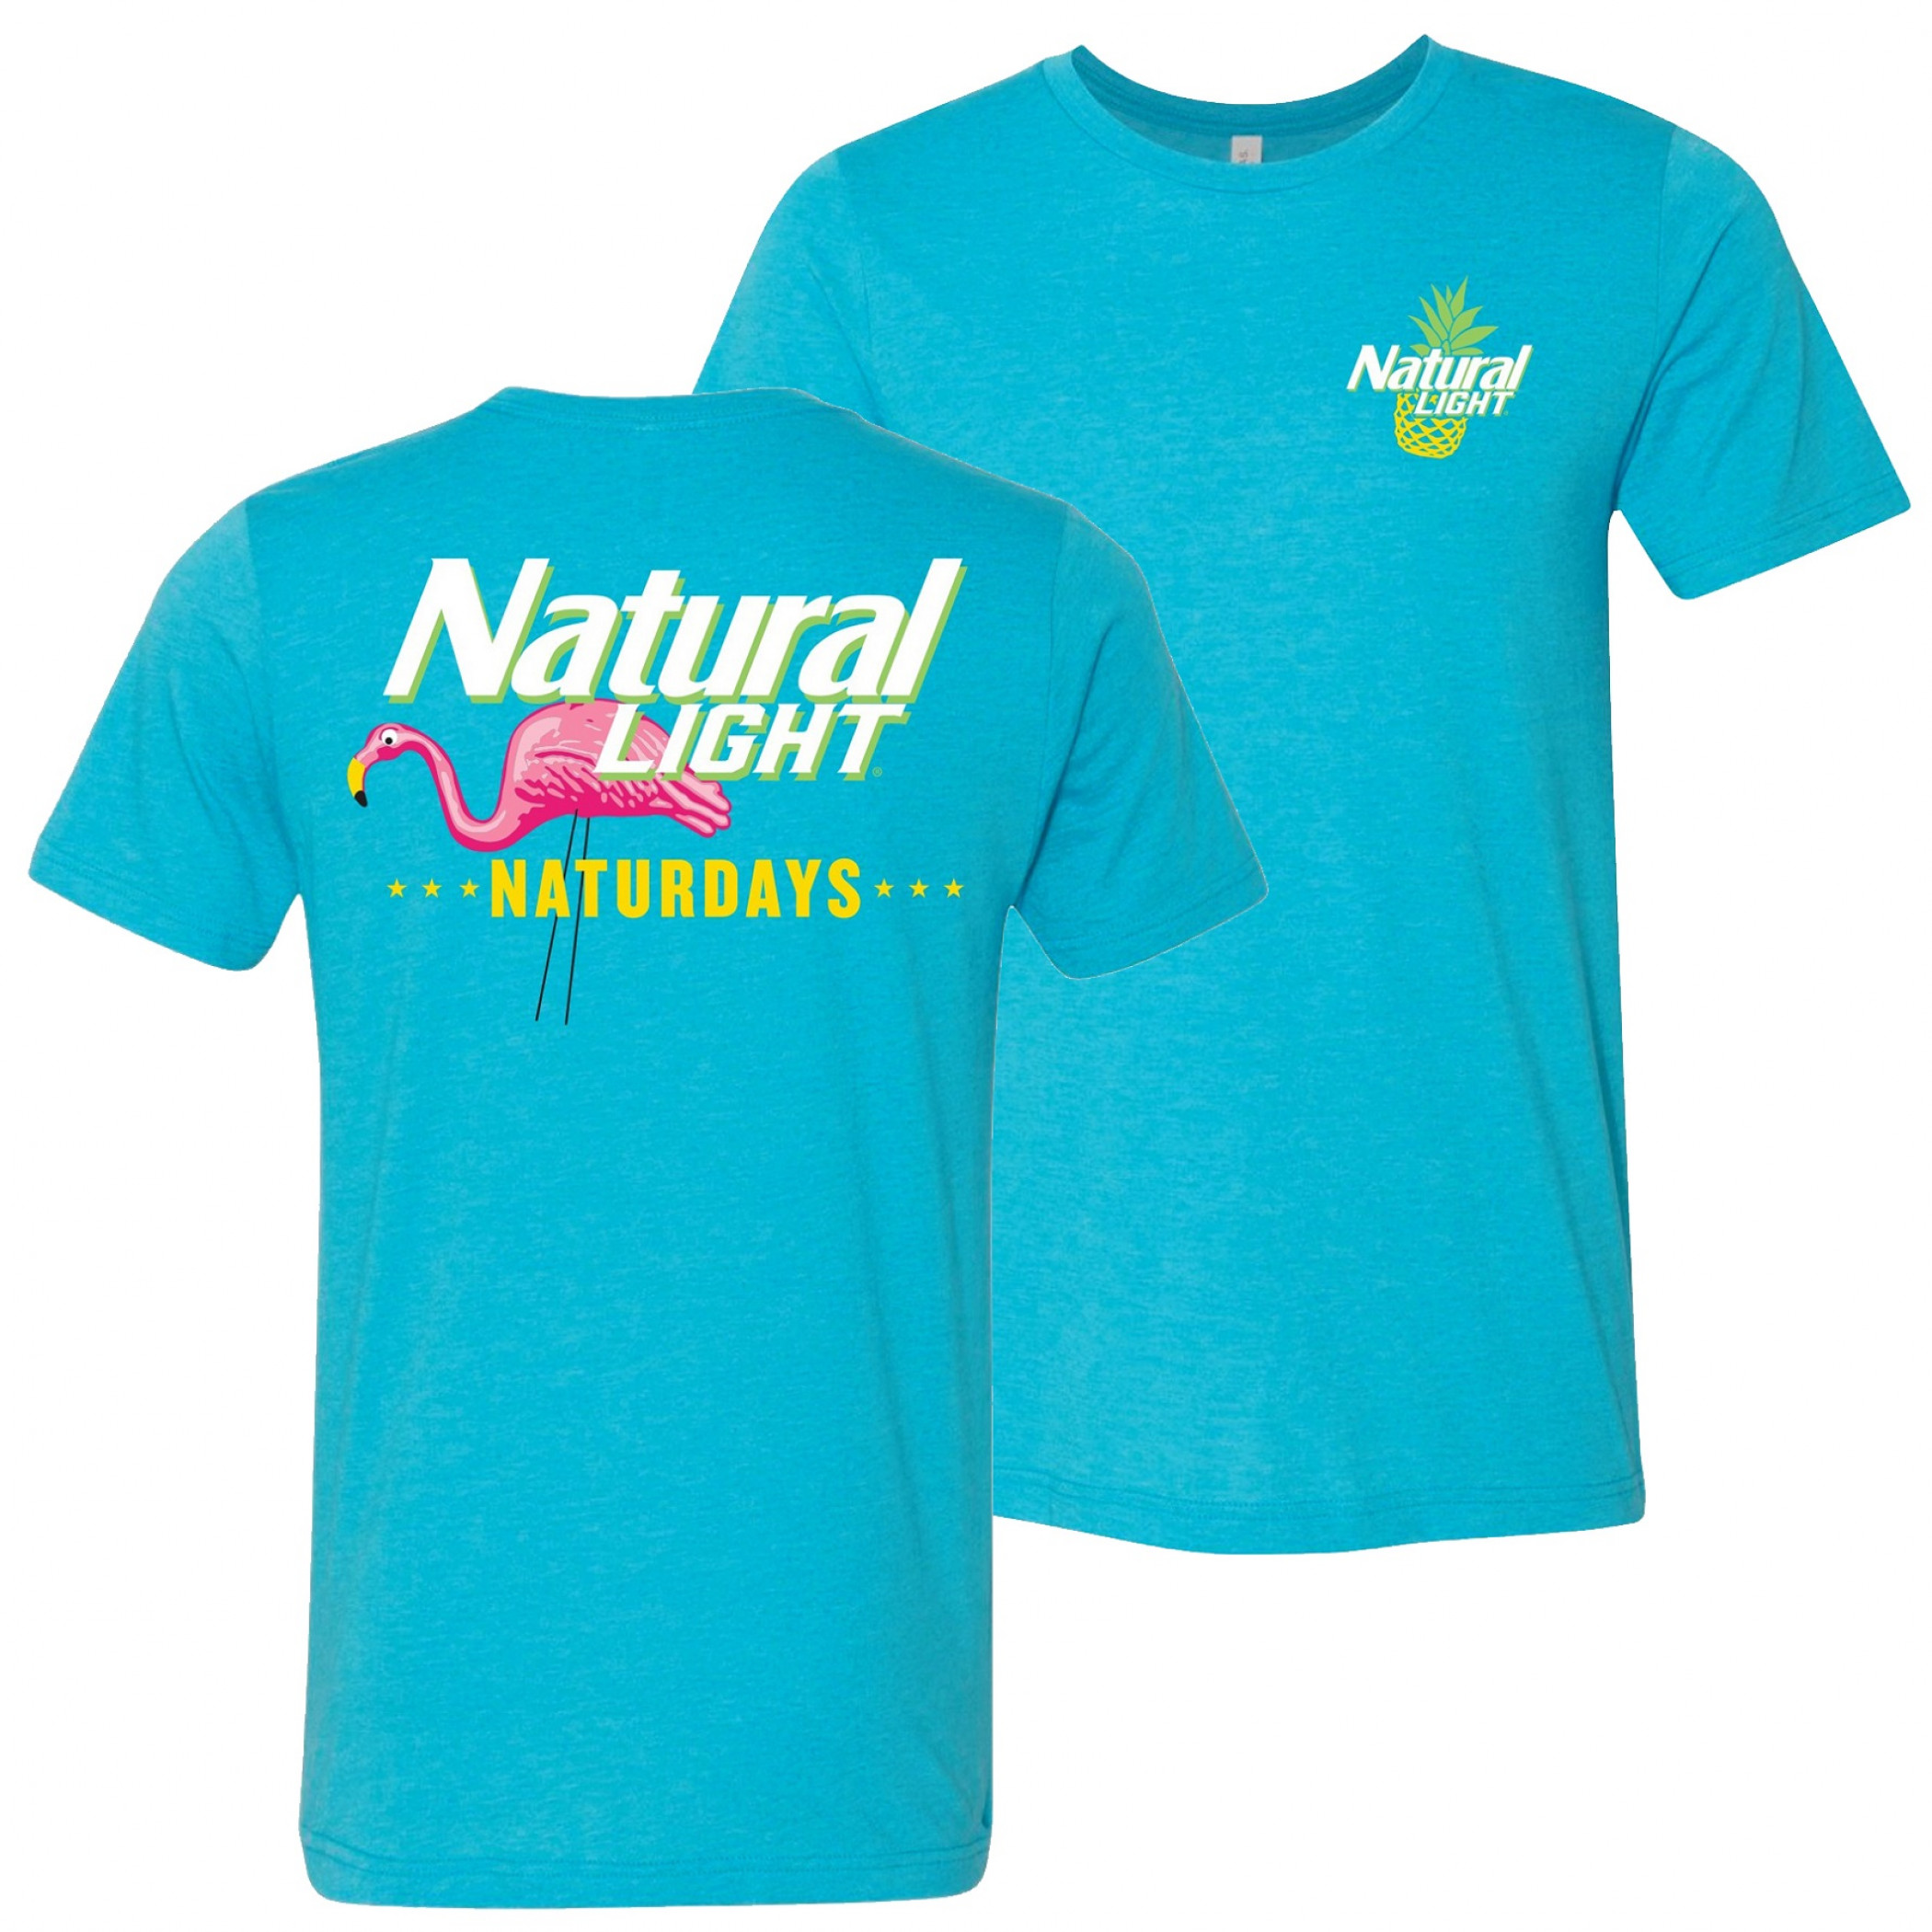 Natural Light Naturdays Pineapple Blue Colorway T-Shirt